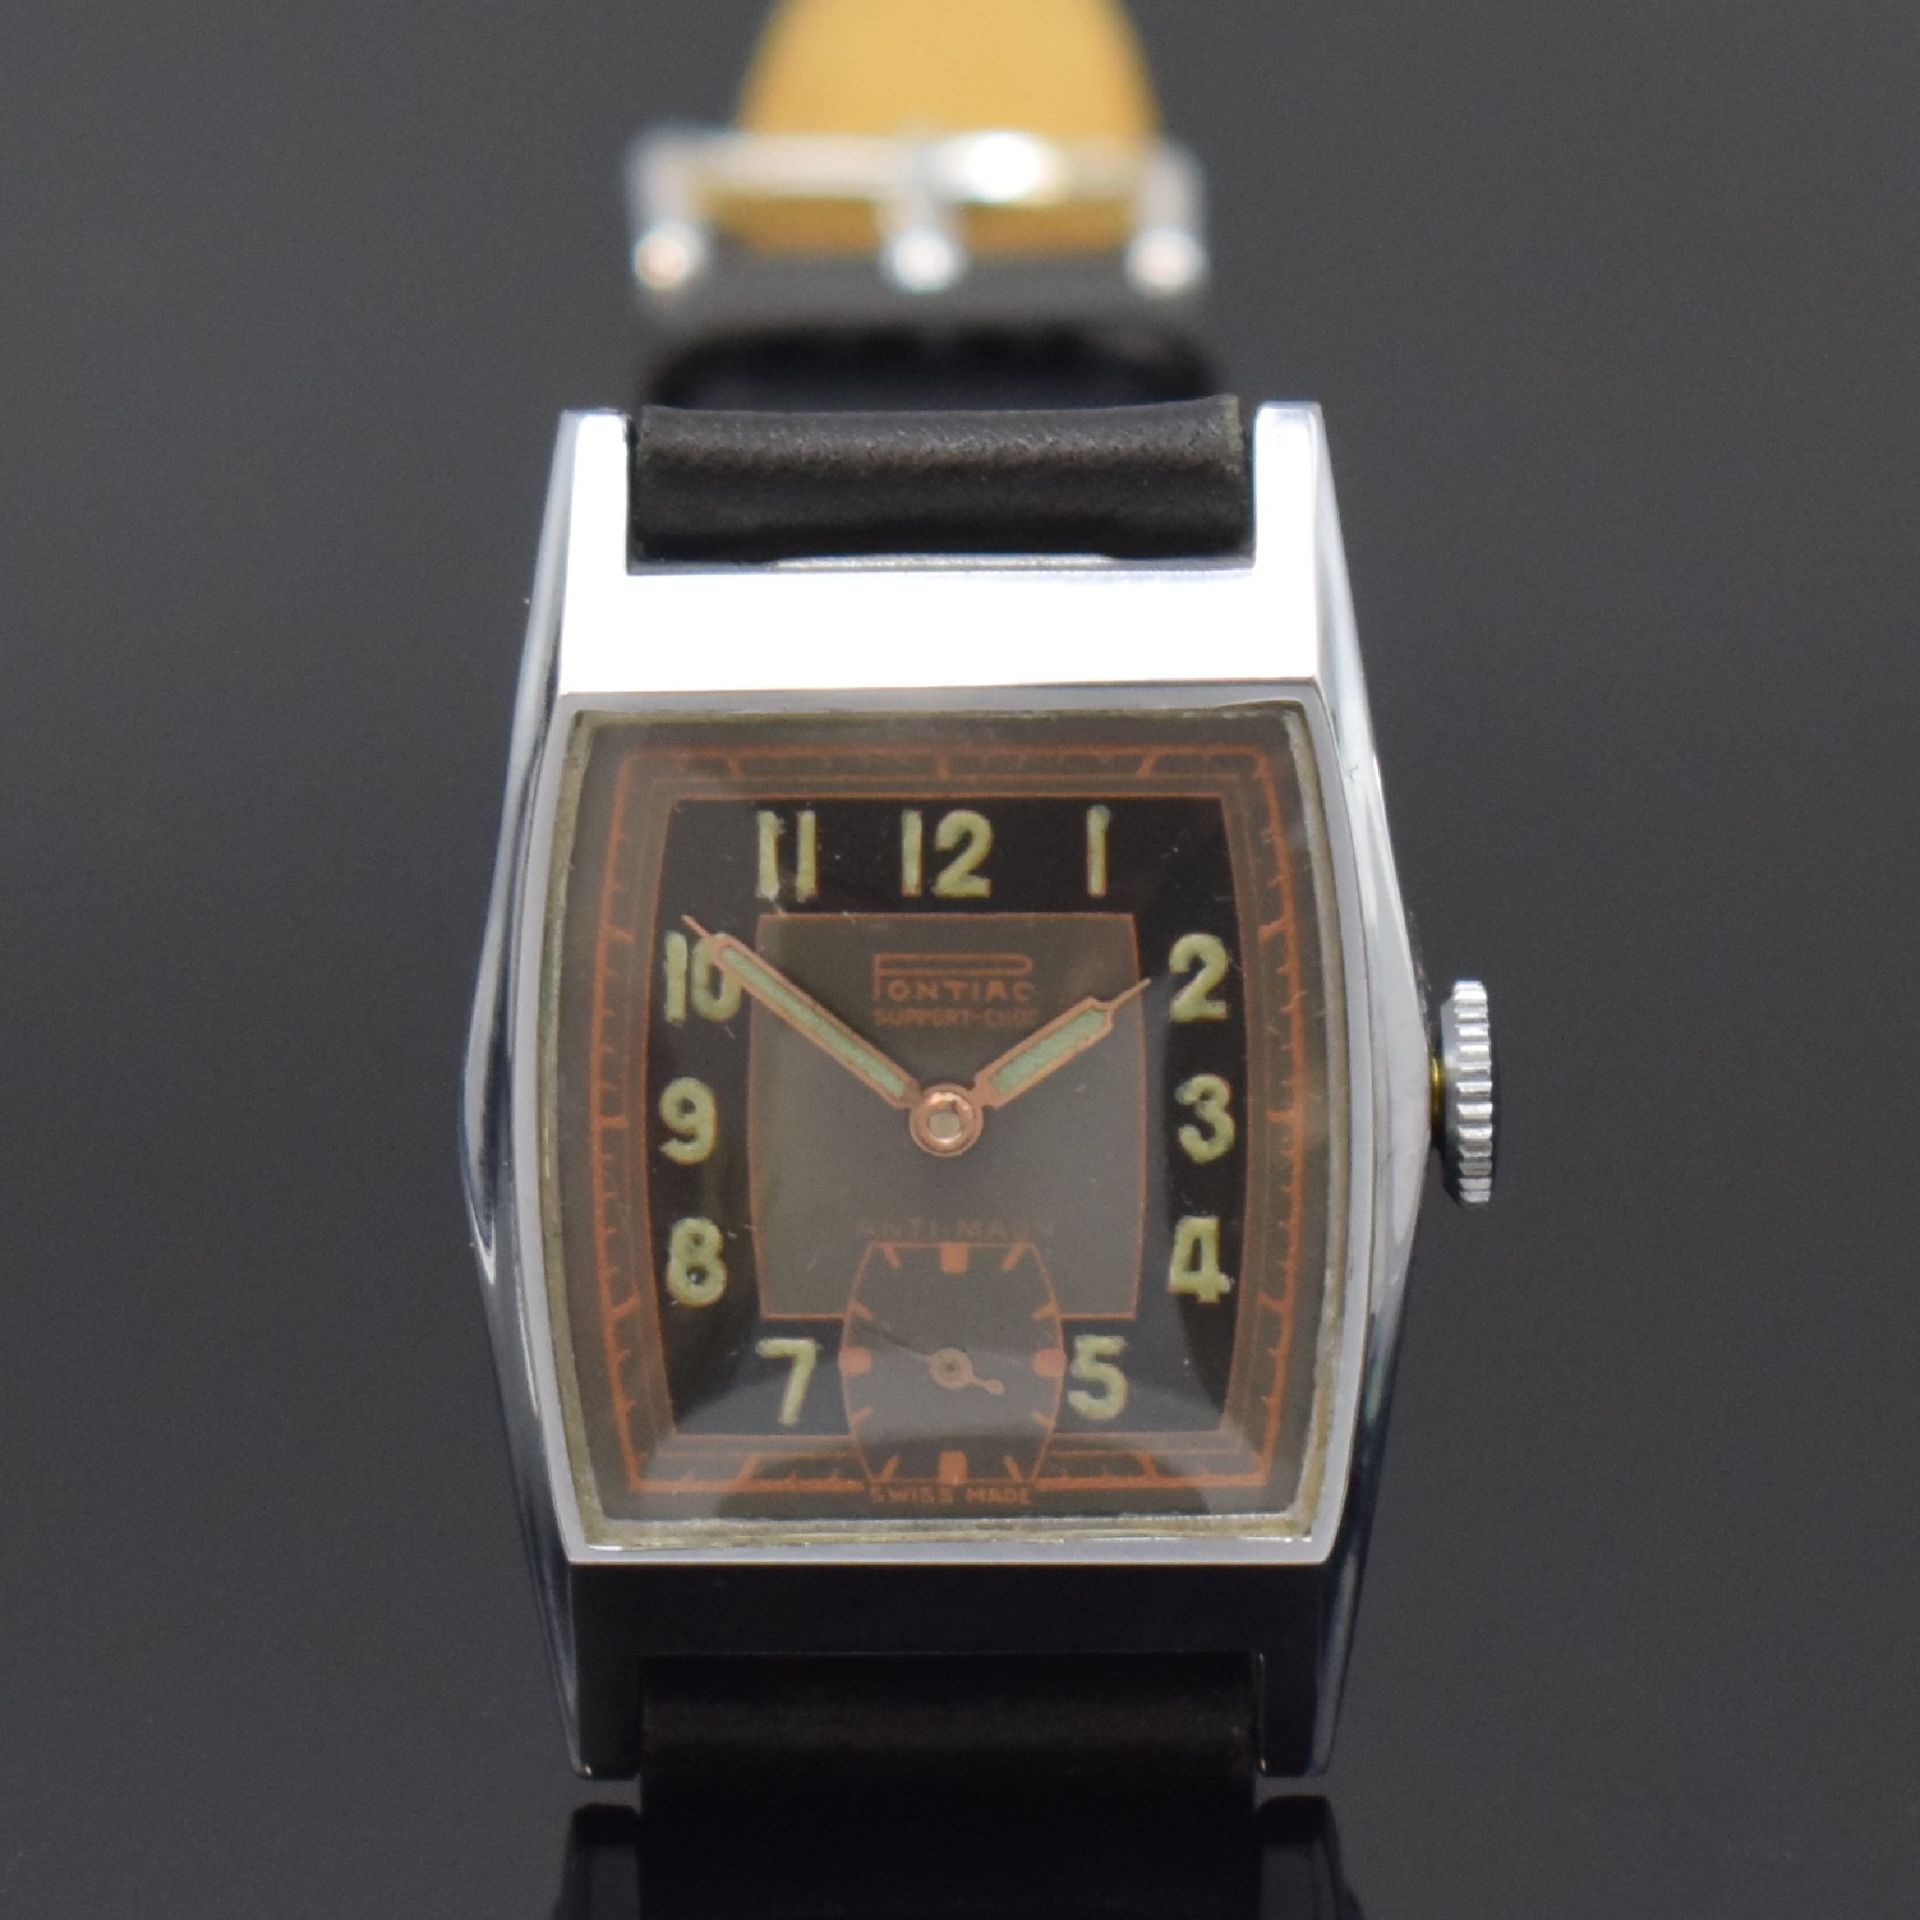 PONTIAC 2 verchromte Armbanduhren, Schweiz um 1940, - Image 2 of 13